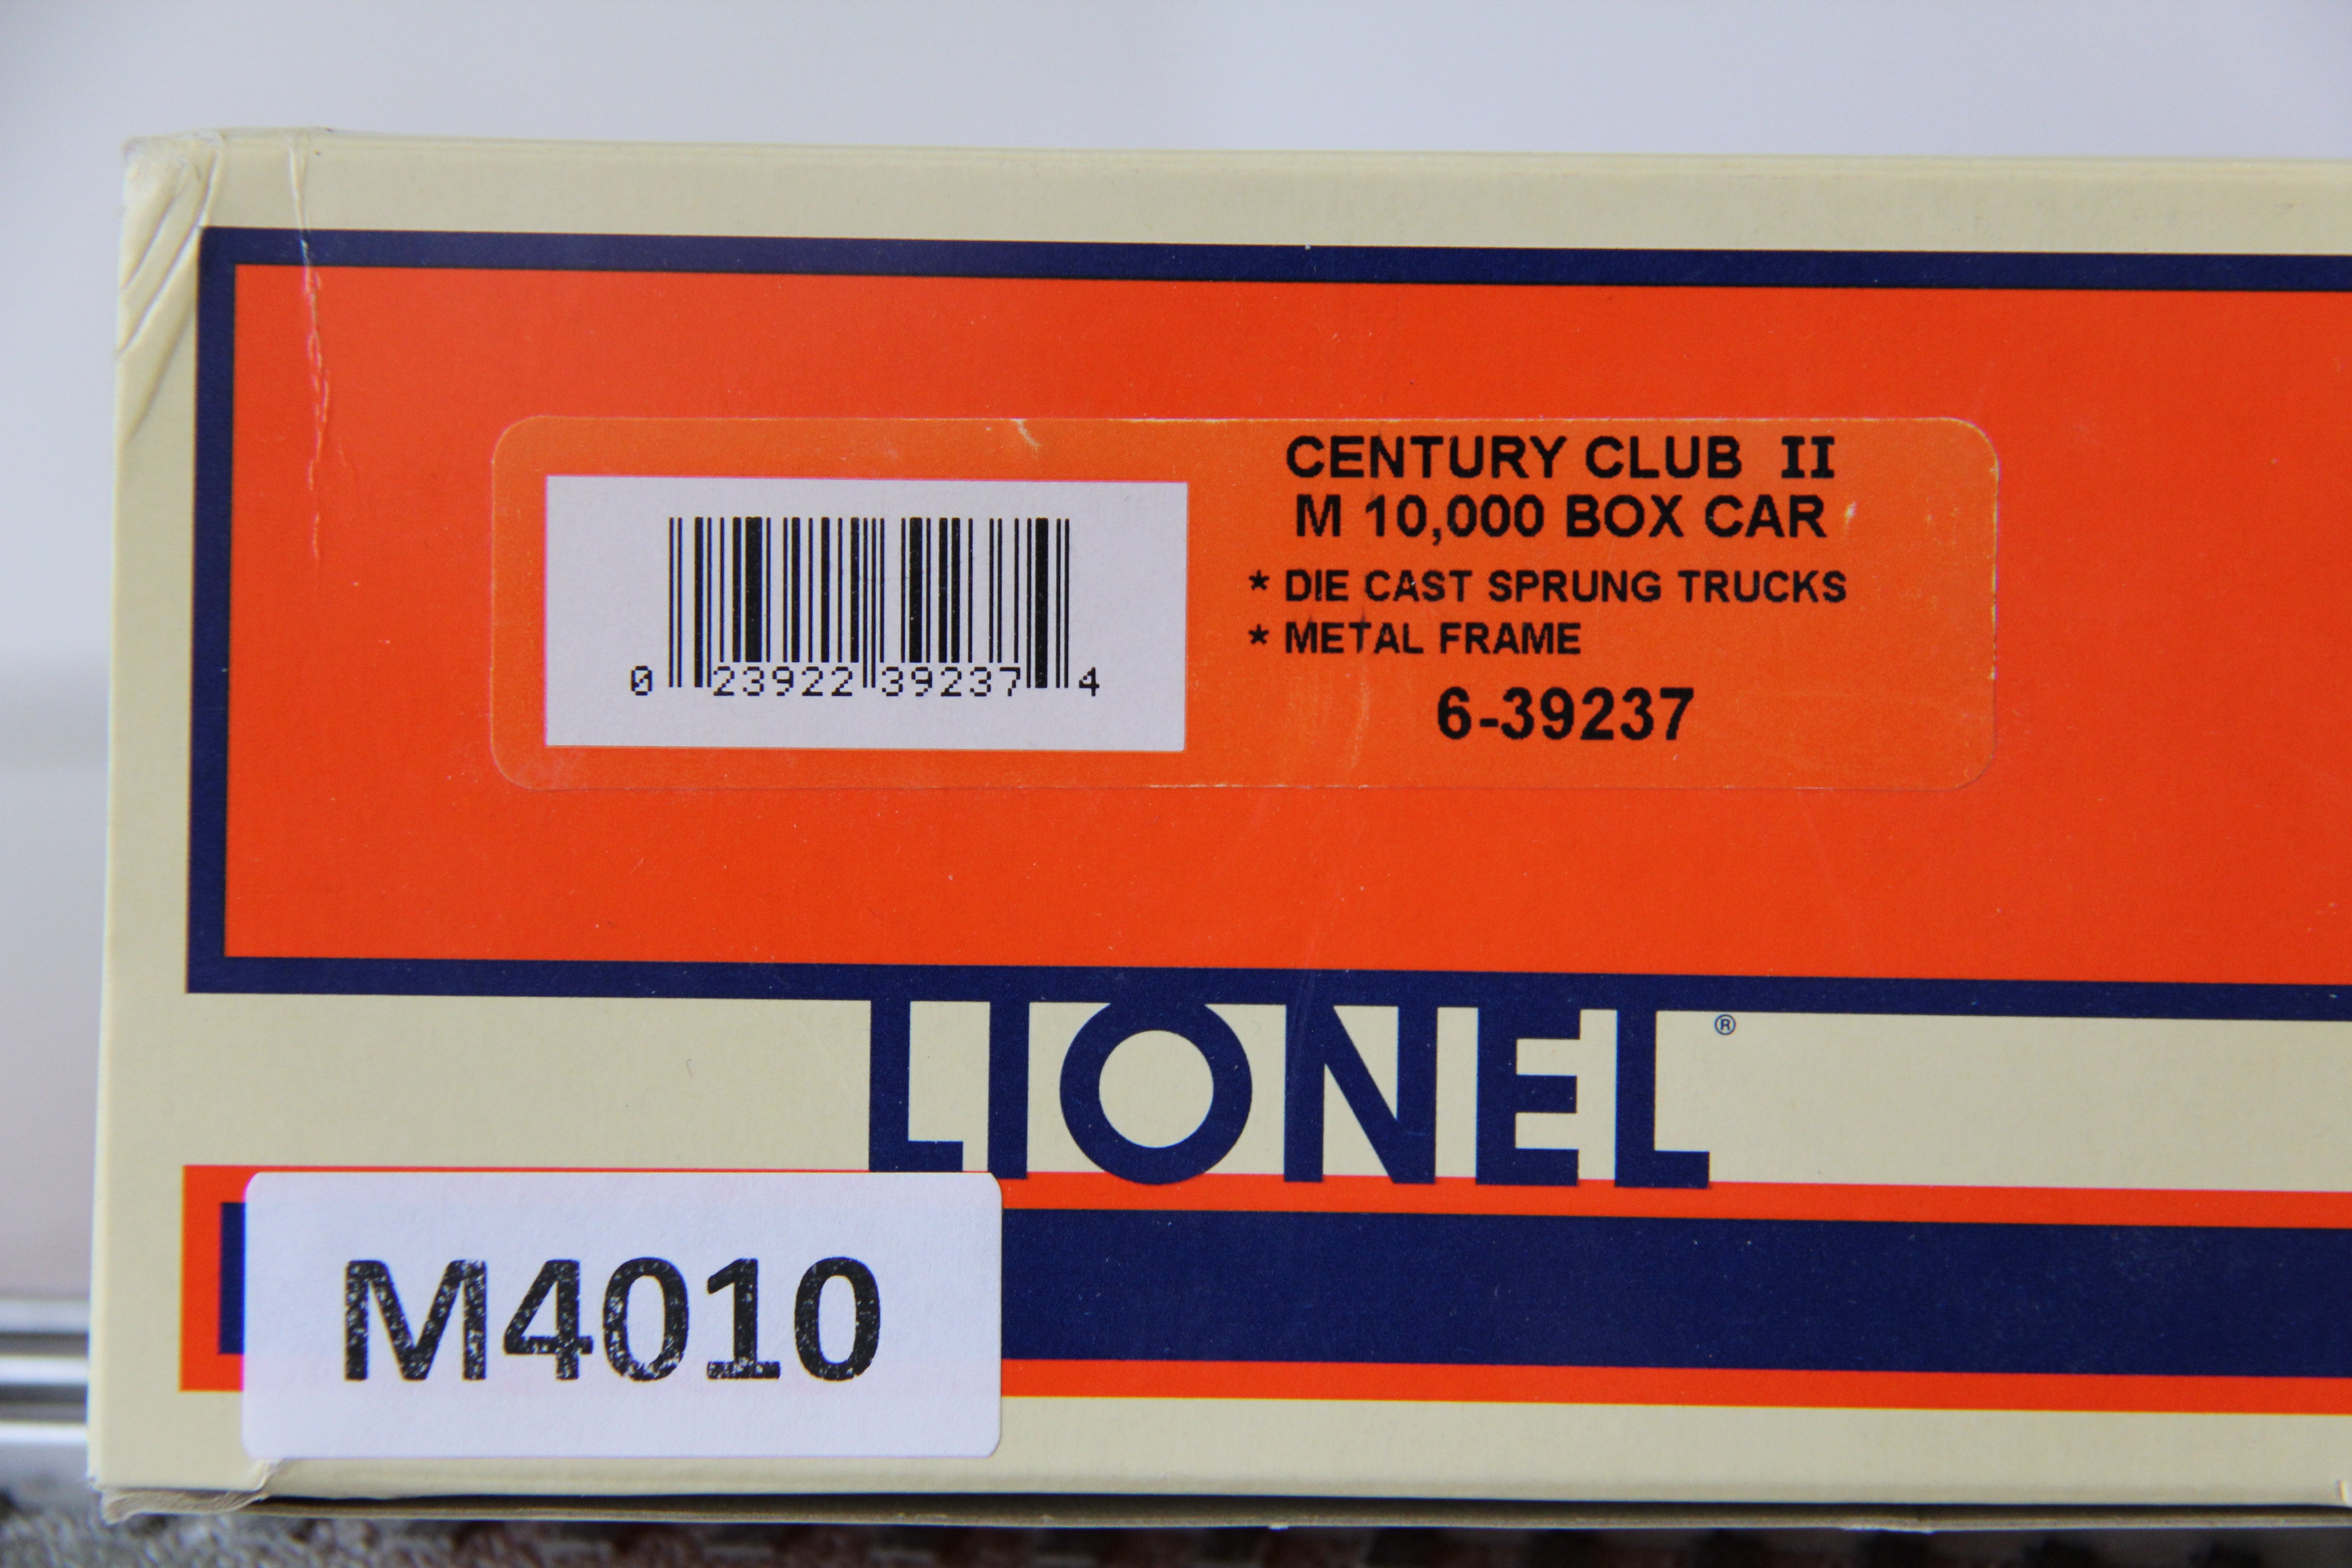 Lionel 6-39237 Century Club II M 10,000 Box Car-Second hand-M4010